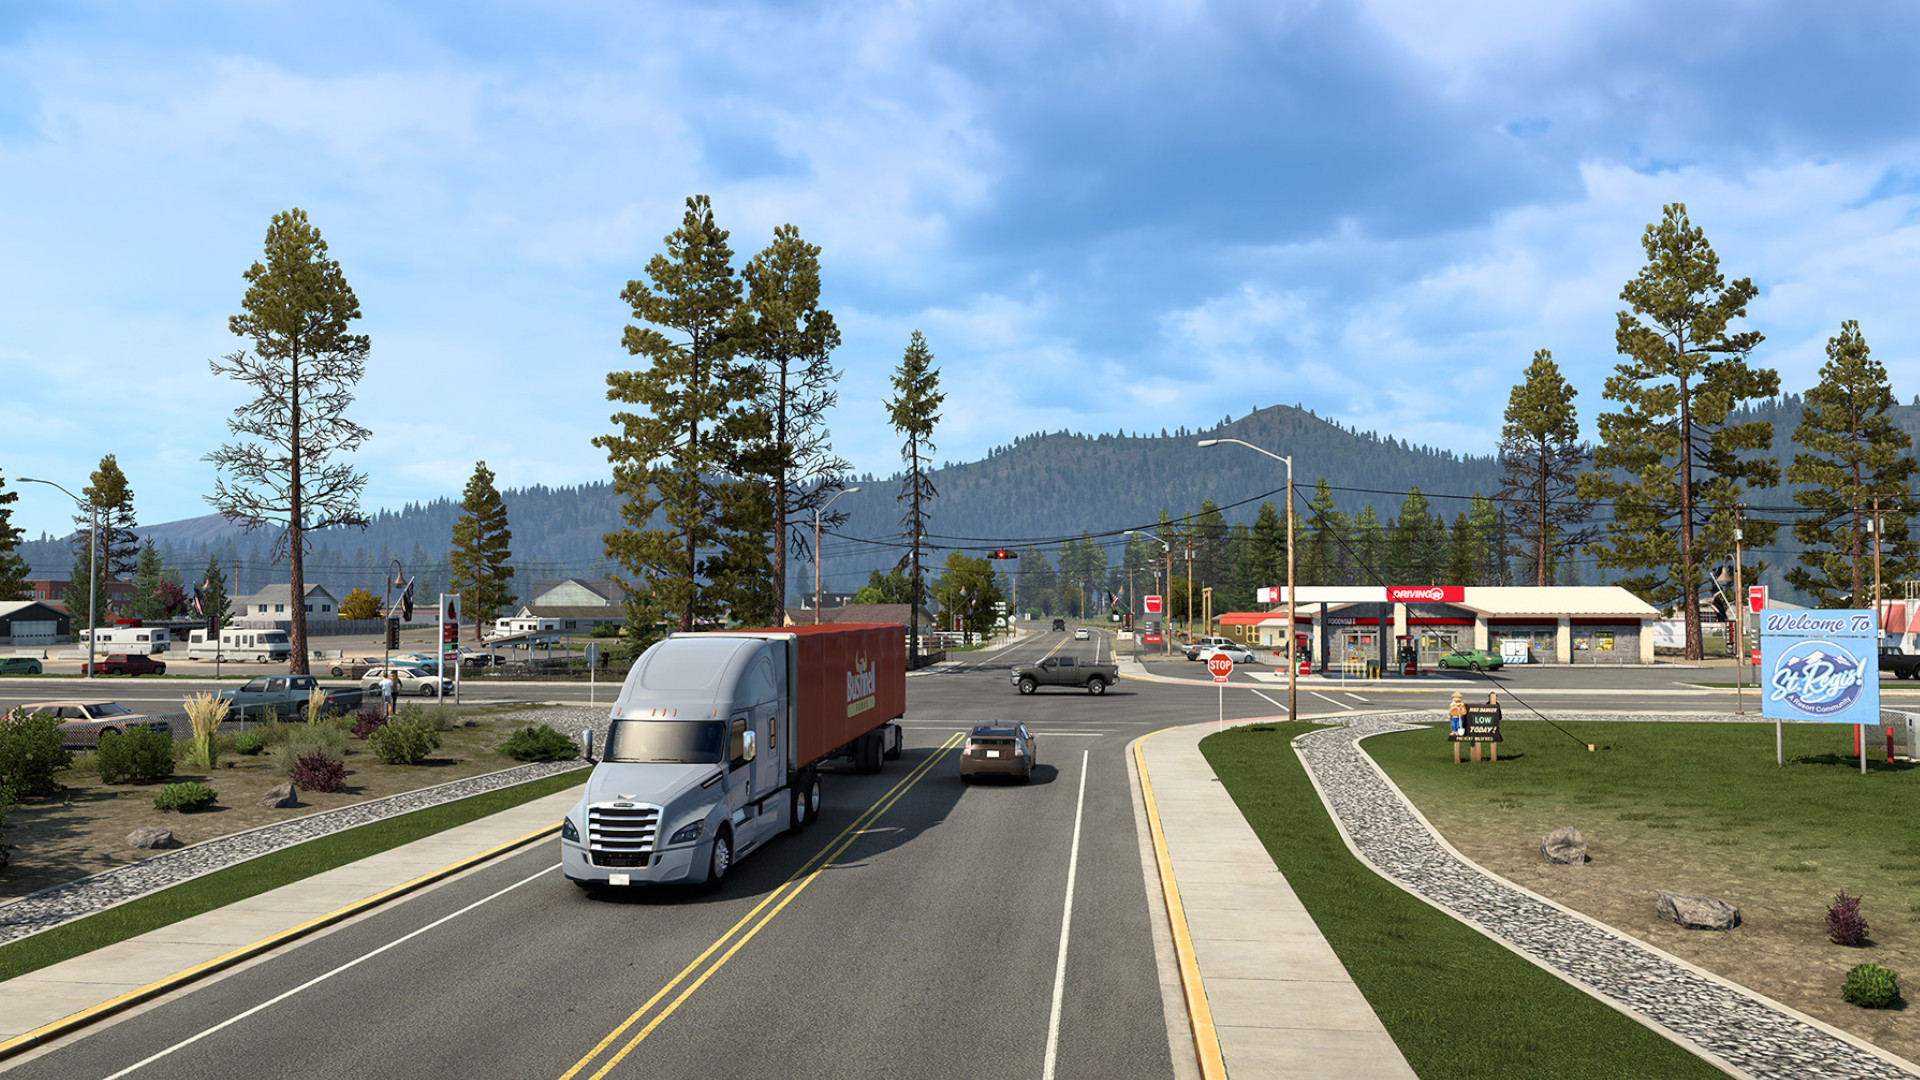 https://www.pcgamesn.com/wp-content/sites/pcgamesn/2022/04/american-truck-simulator-montana-map.jpg